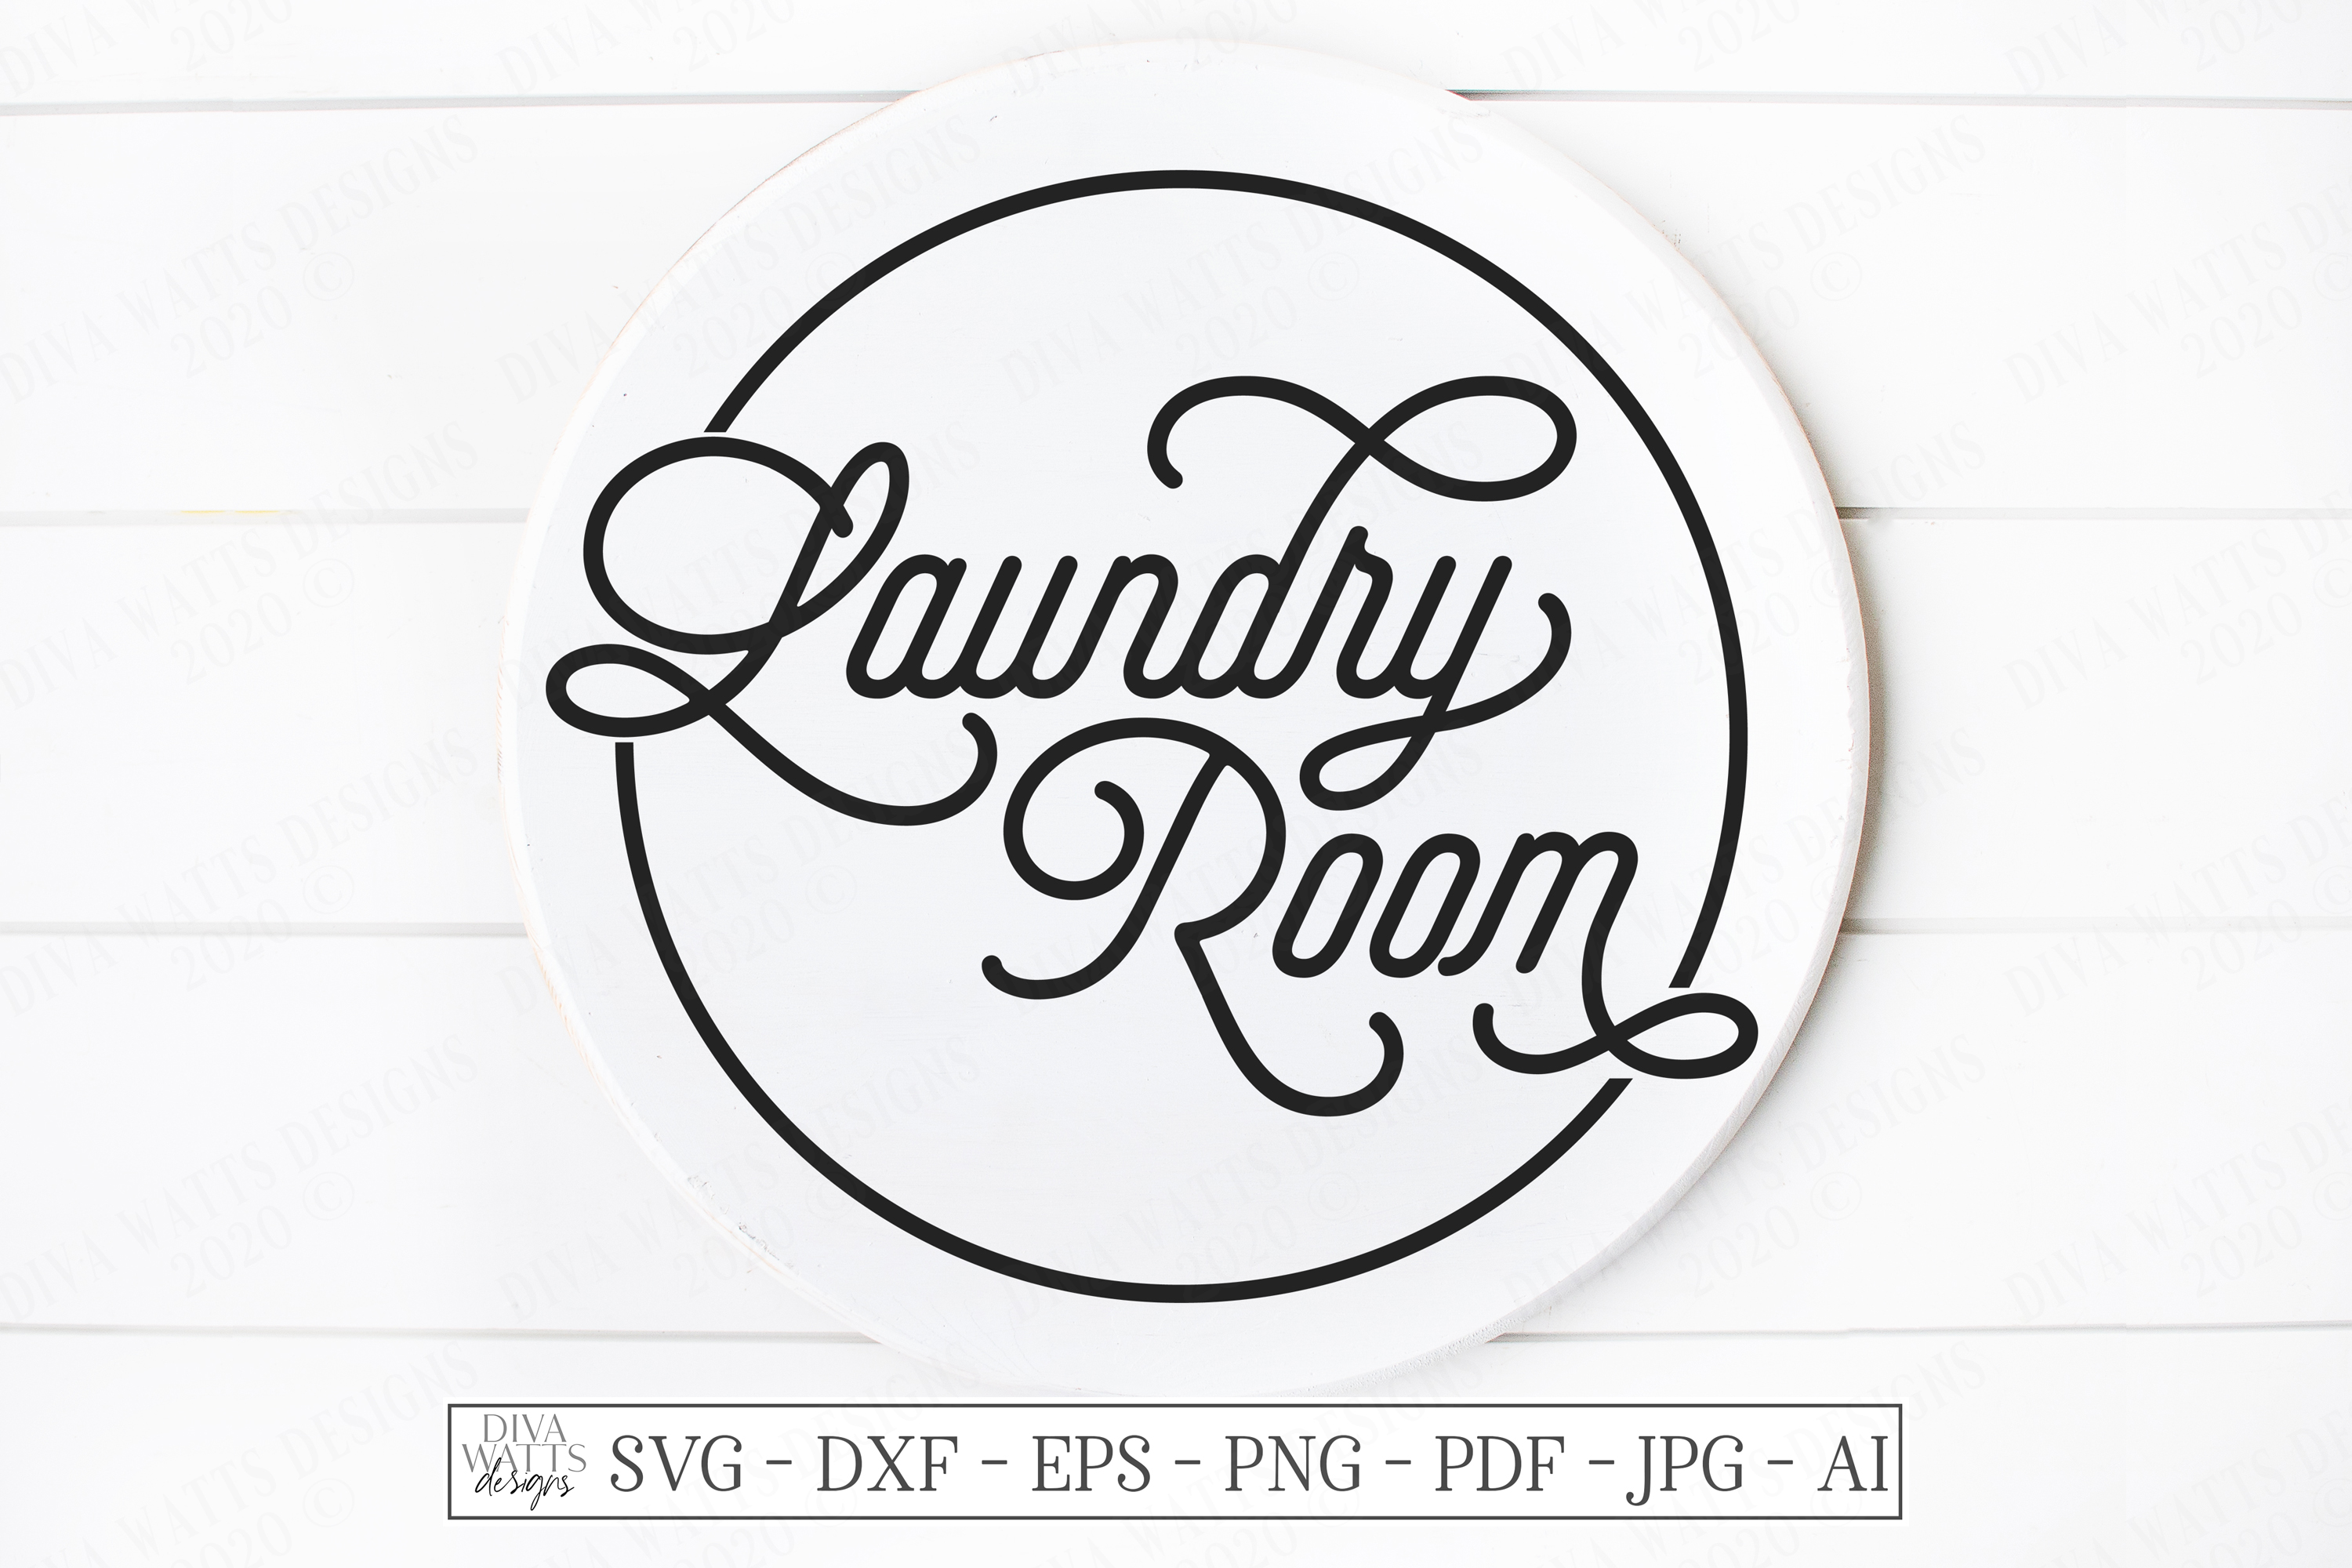 Laundry Room - Retro Vintage Style - Circular Round Sign SVG (518568) | SVGs | Design Bundles